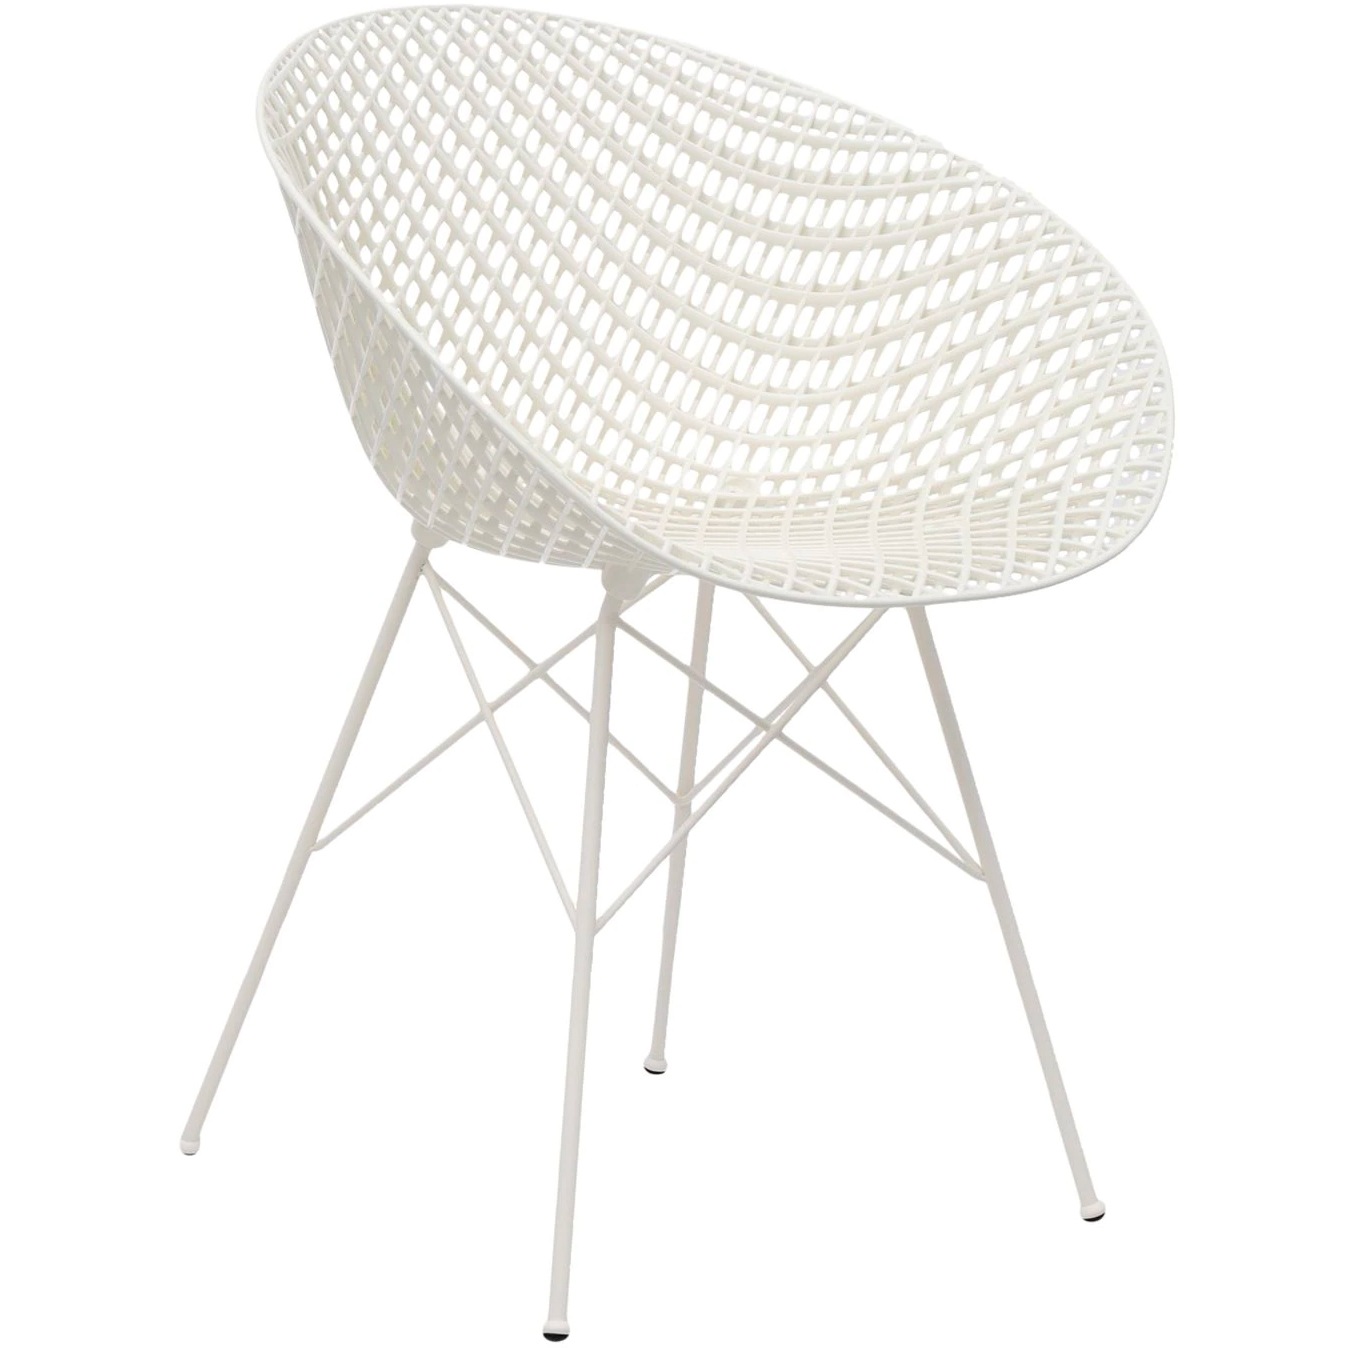 Smatrik Chair, White